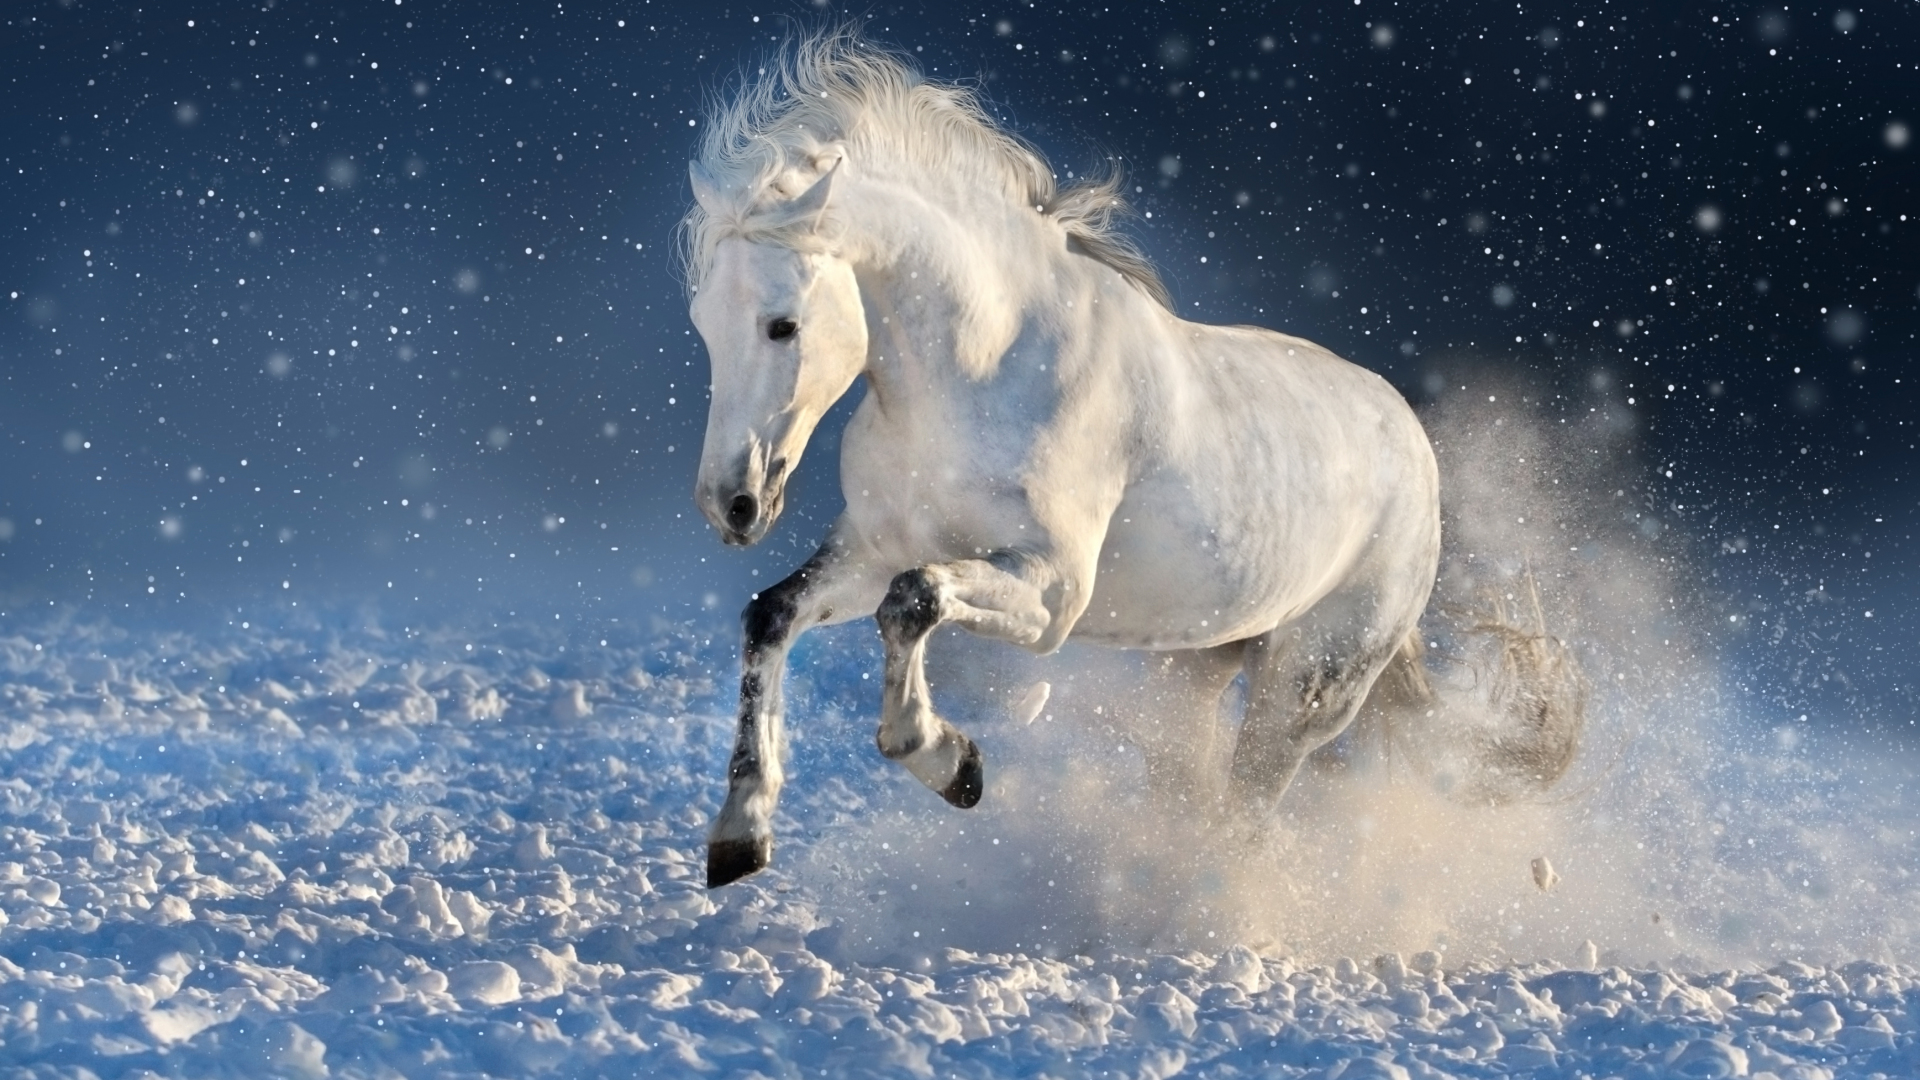 hd portrait wallpapers 1080p,horse,sky,mane,stallion,winter